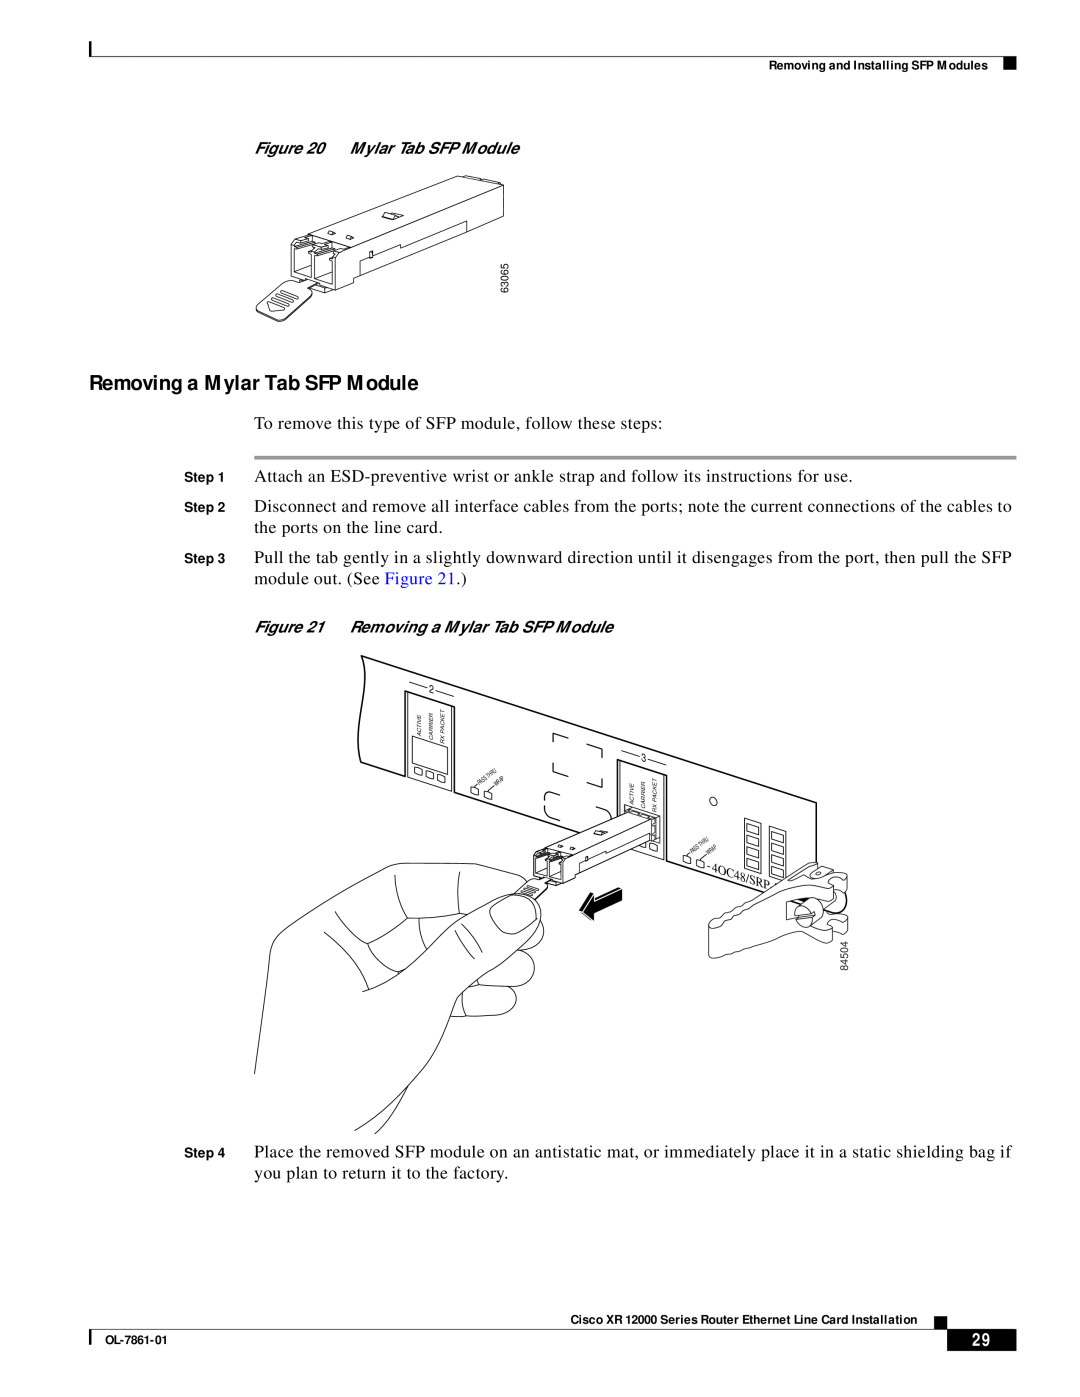 Cisco Systems OL-7861-01 manual Removing a Mylar Tab SFP Module 